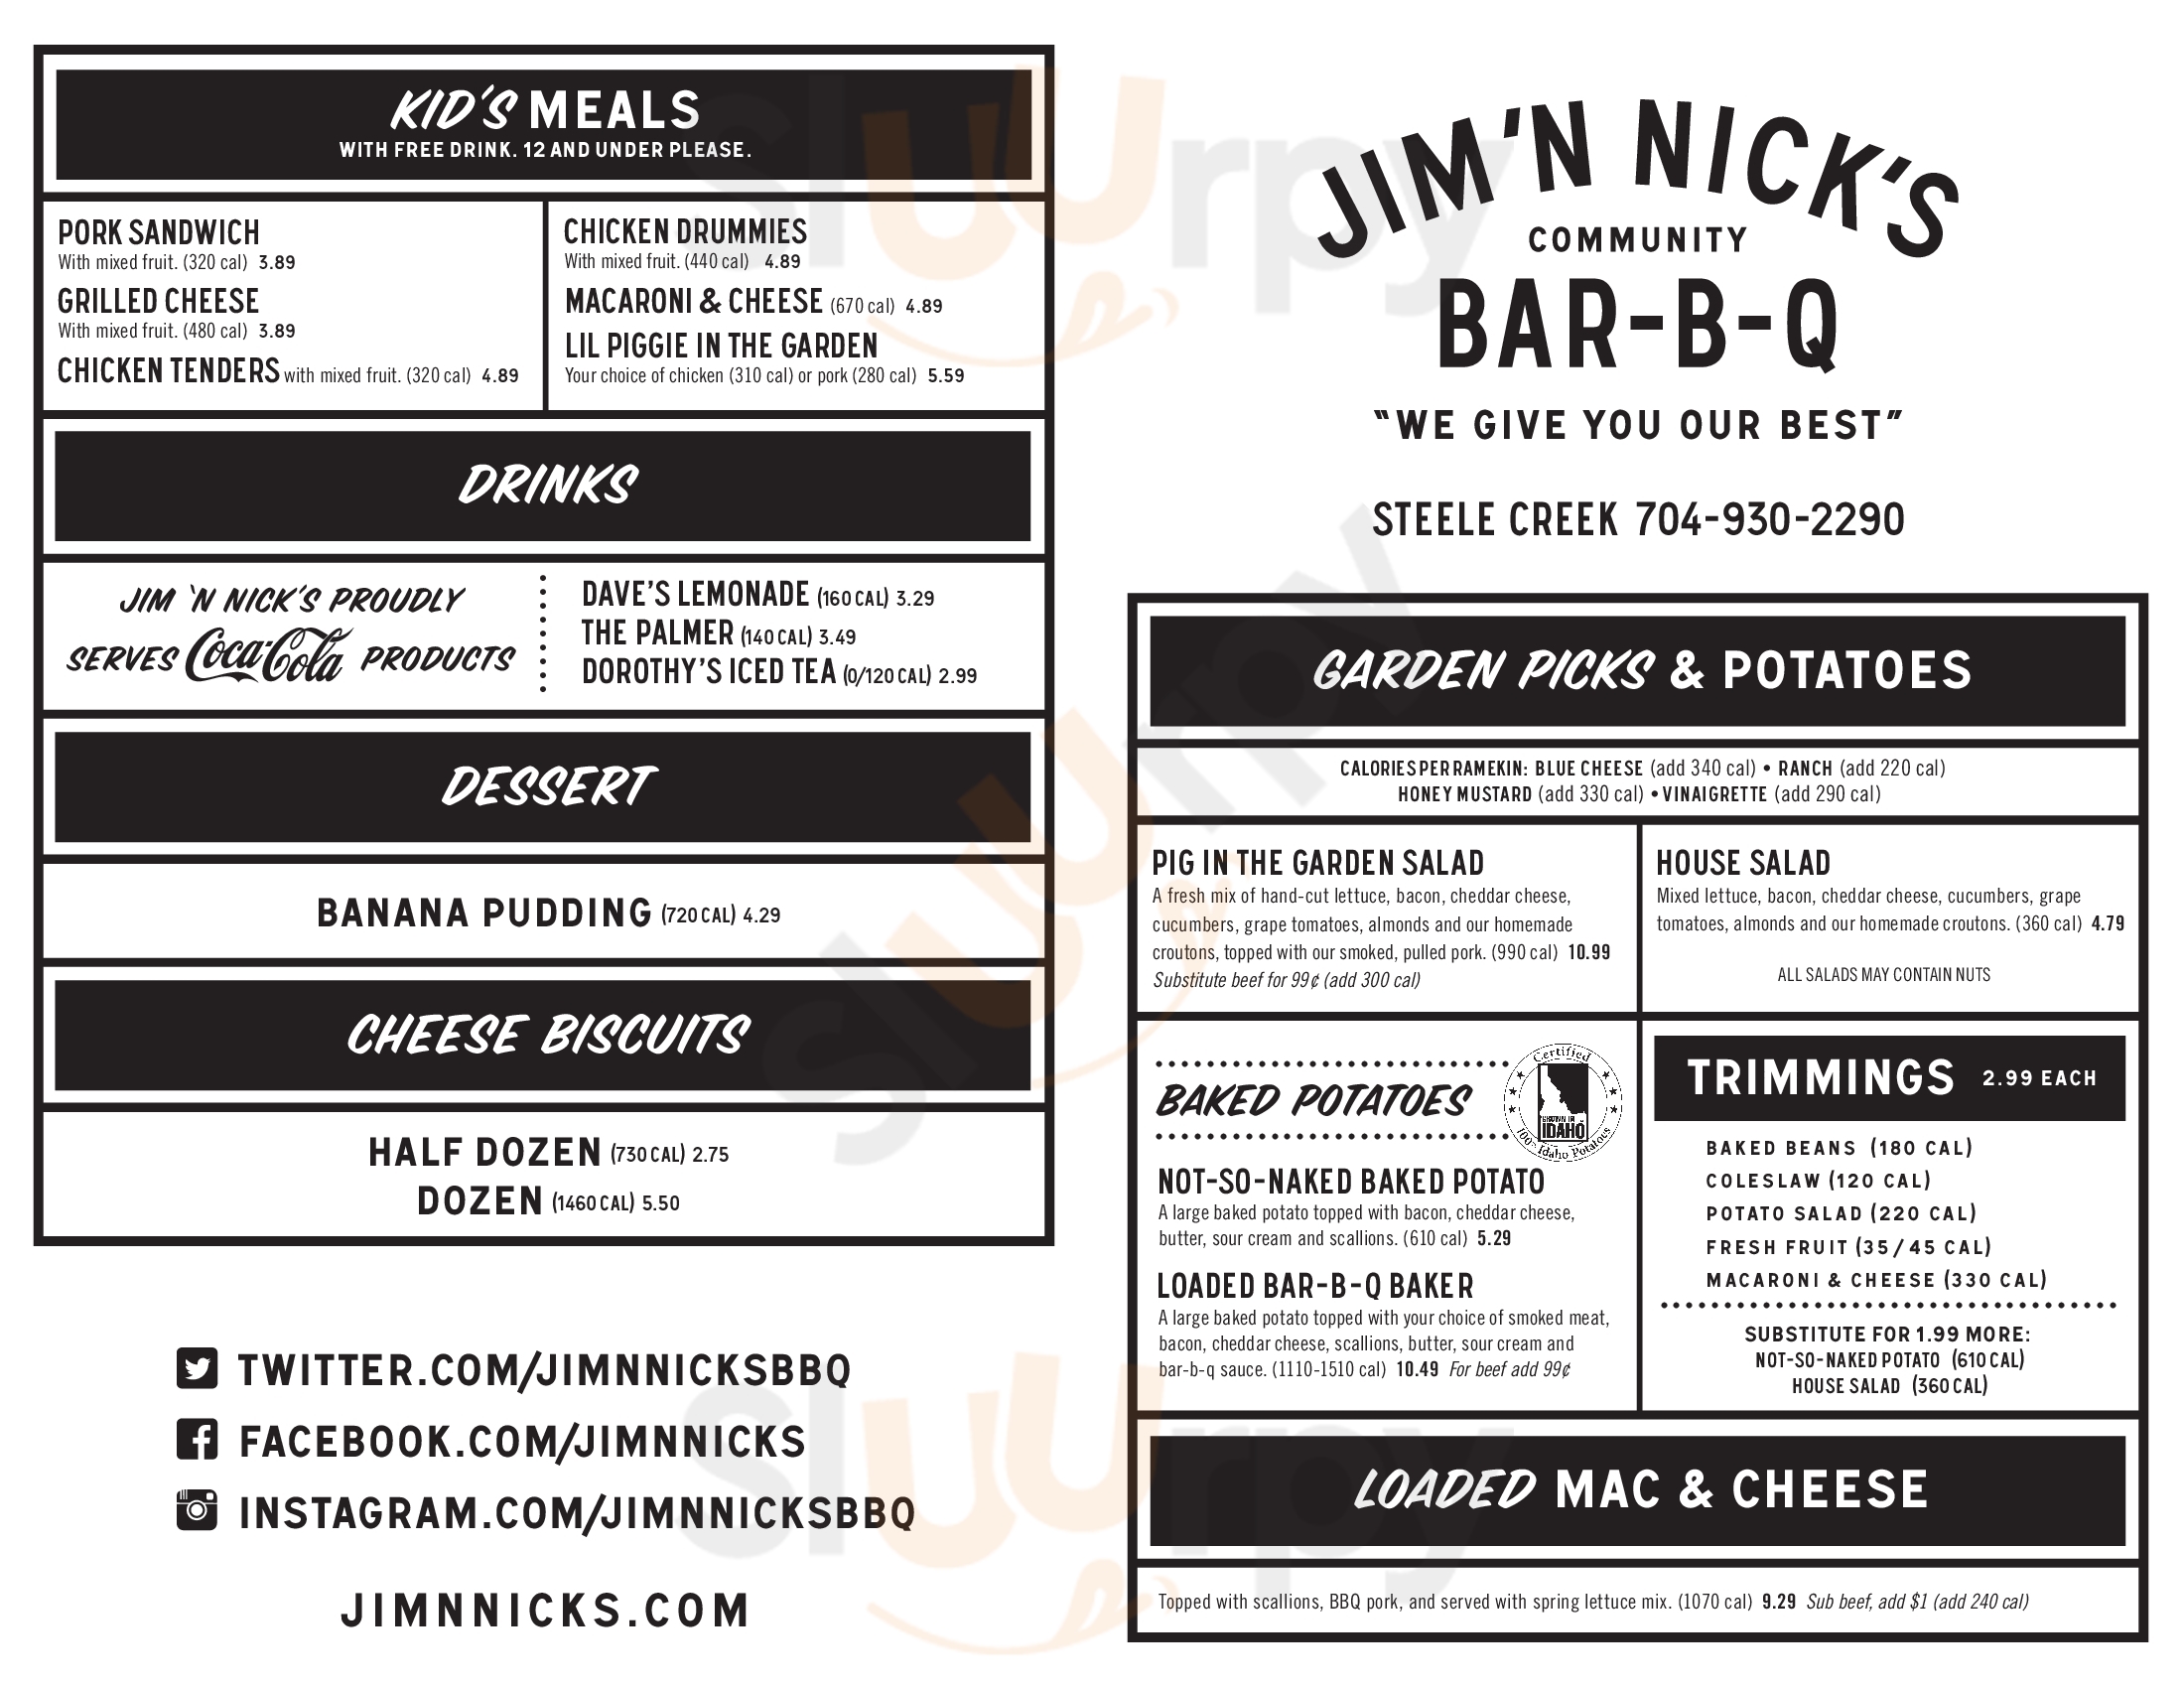 Jim 'n Nick's Bar-b-q Charlotte Menu - 1